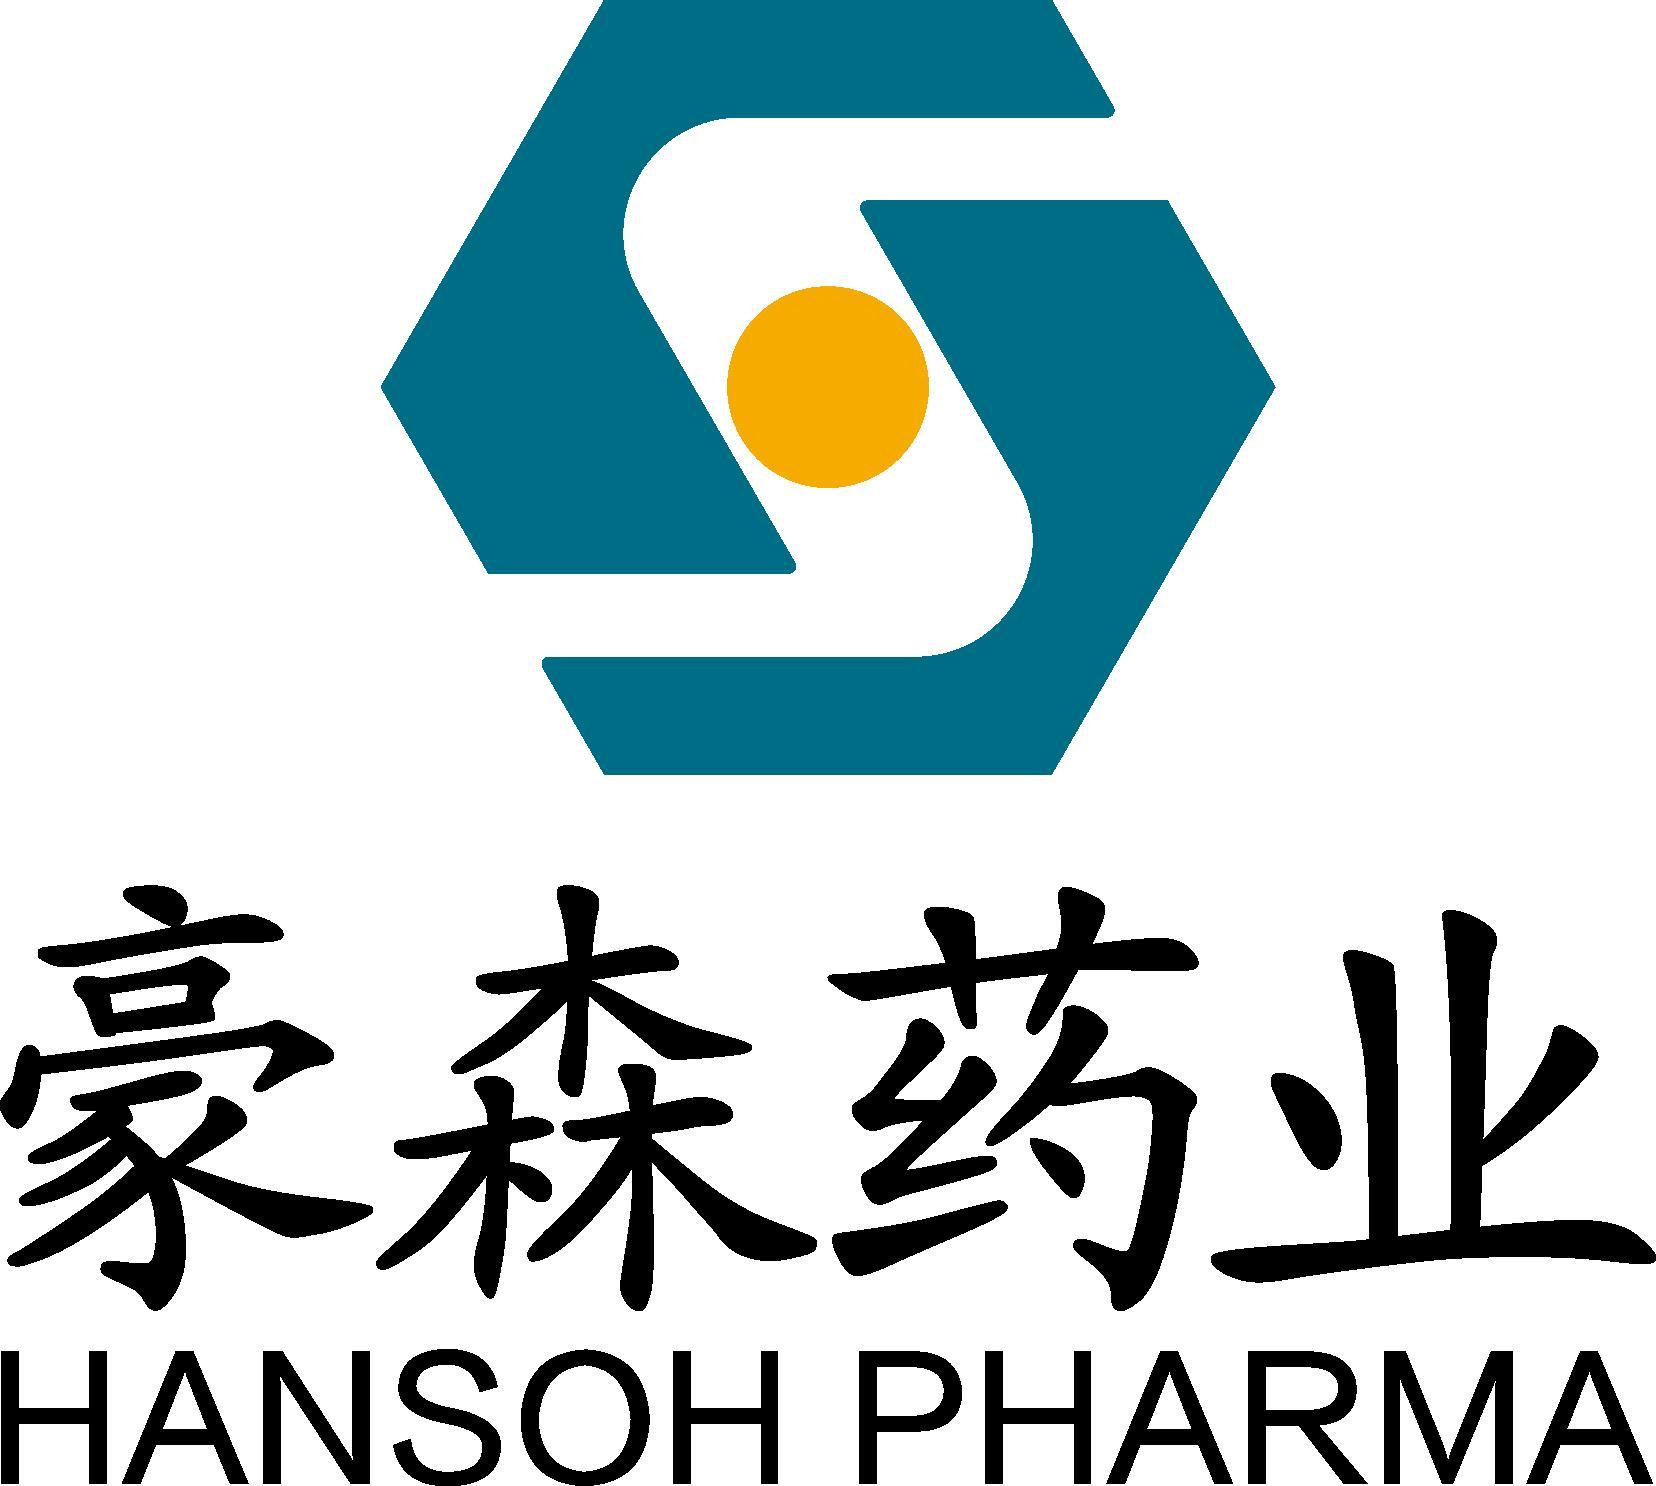 豪森药业 hansoh pharma商标公告